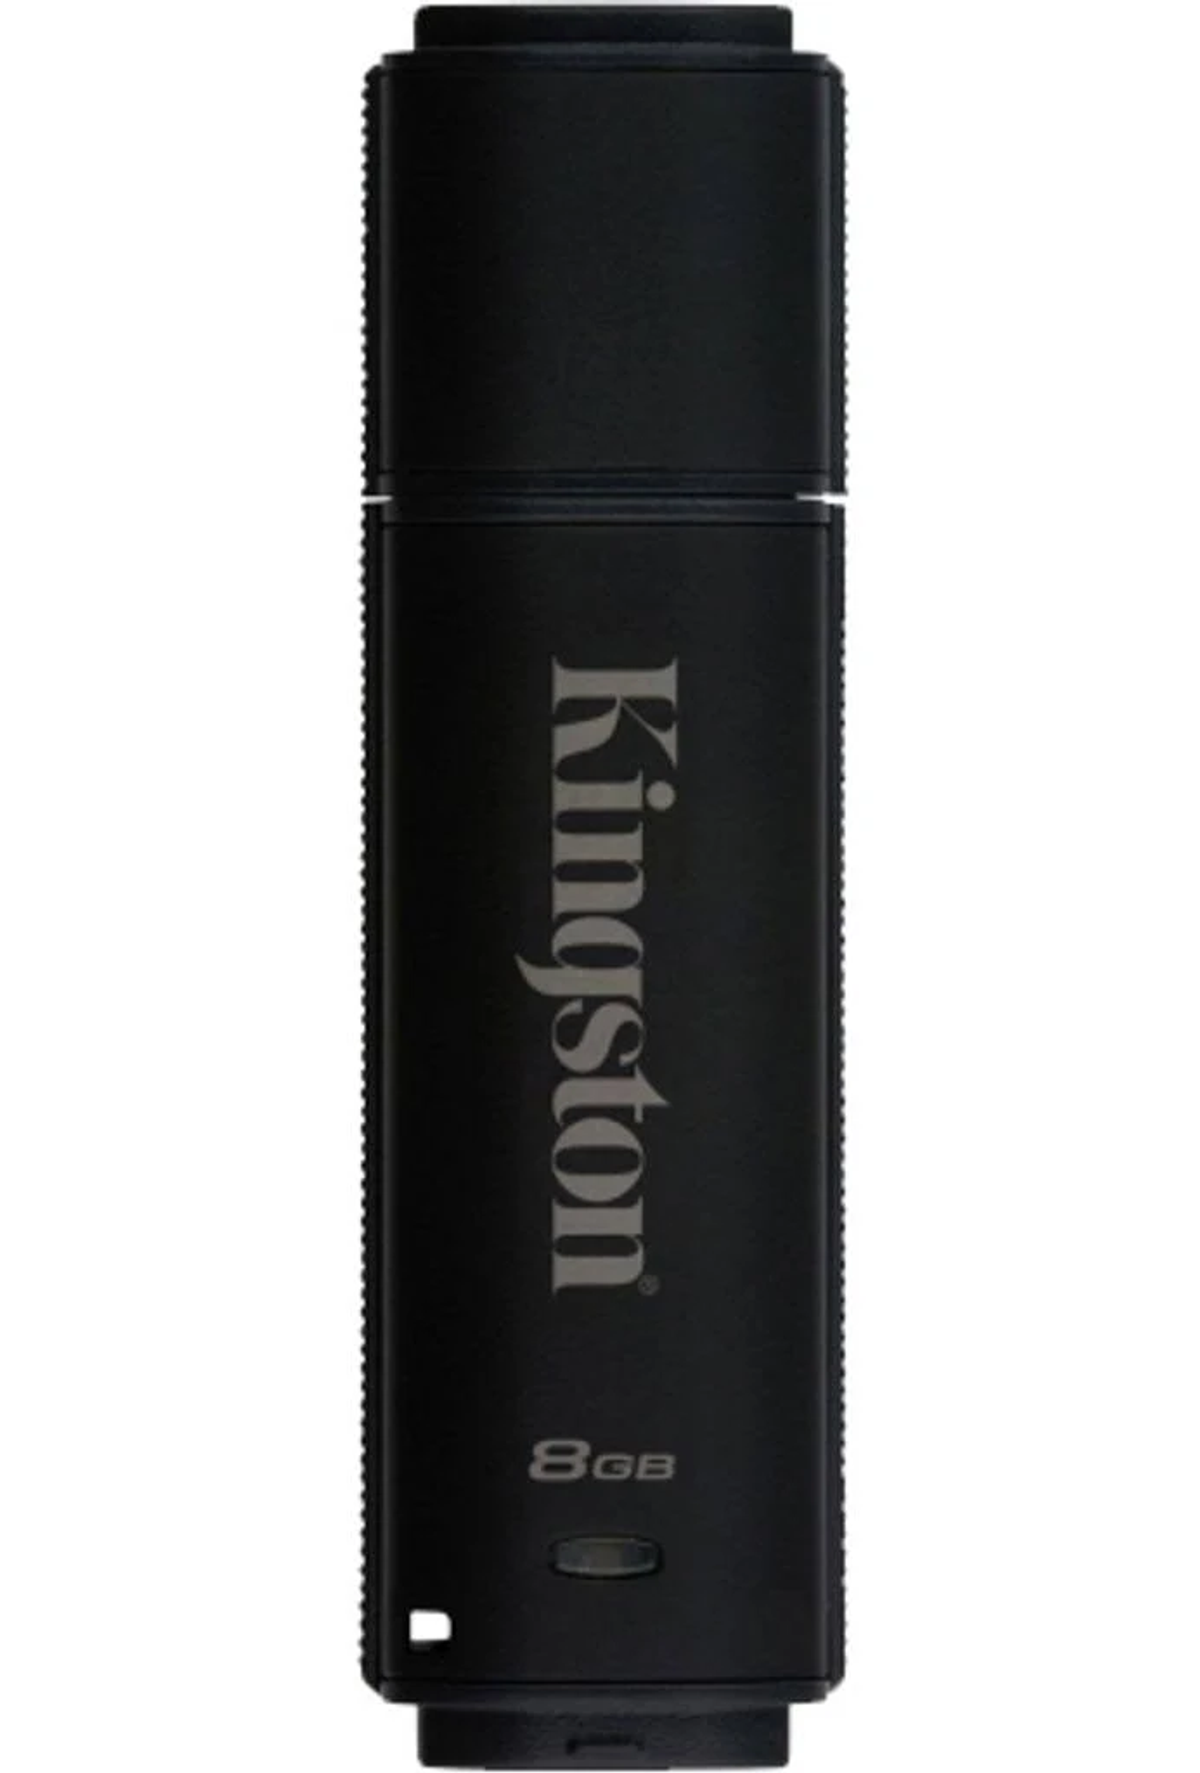 KINGSTON DT4000G2DM/32GB USB-Flash-Laufwerk (Schwarz, GB) 32